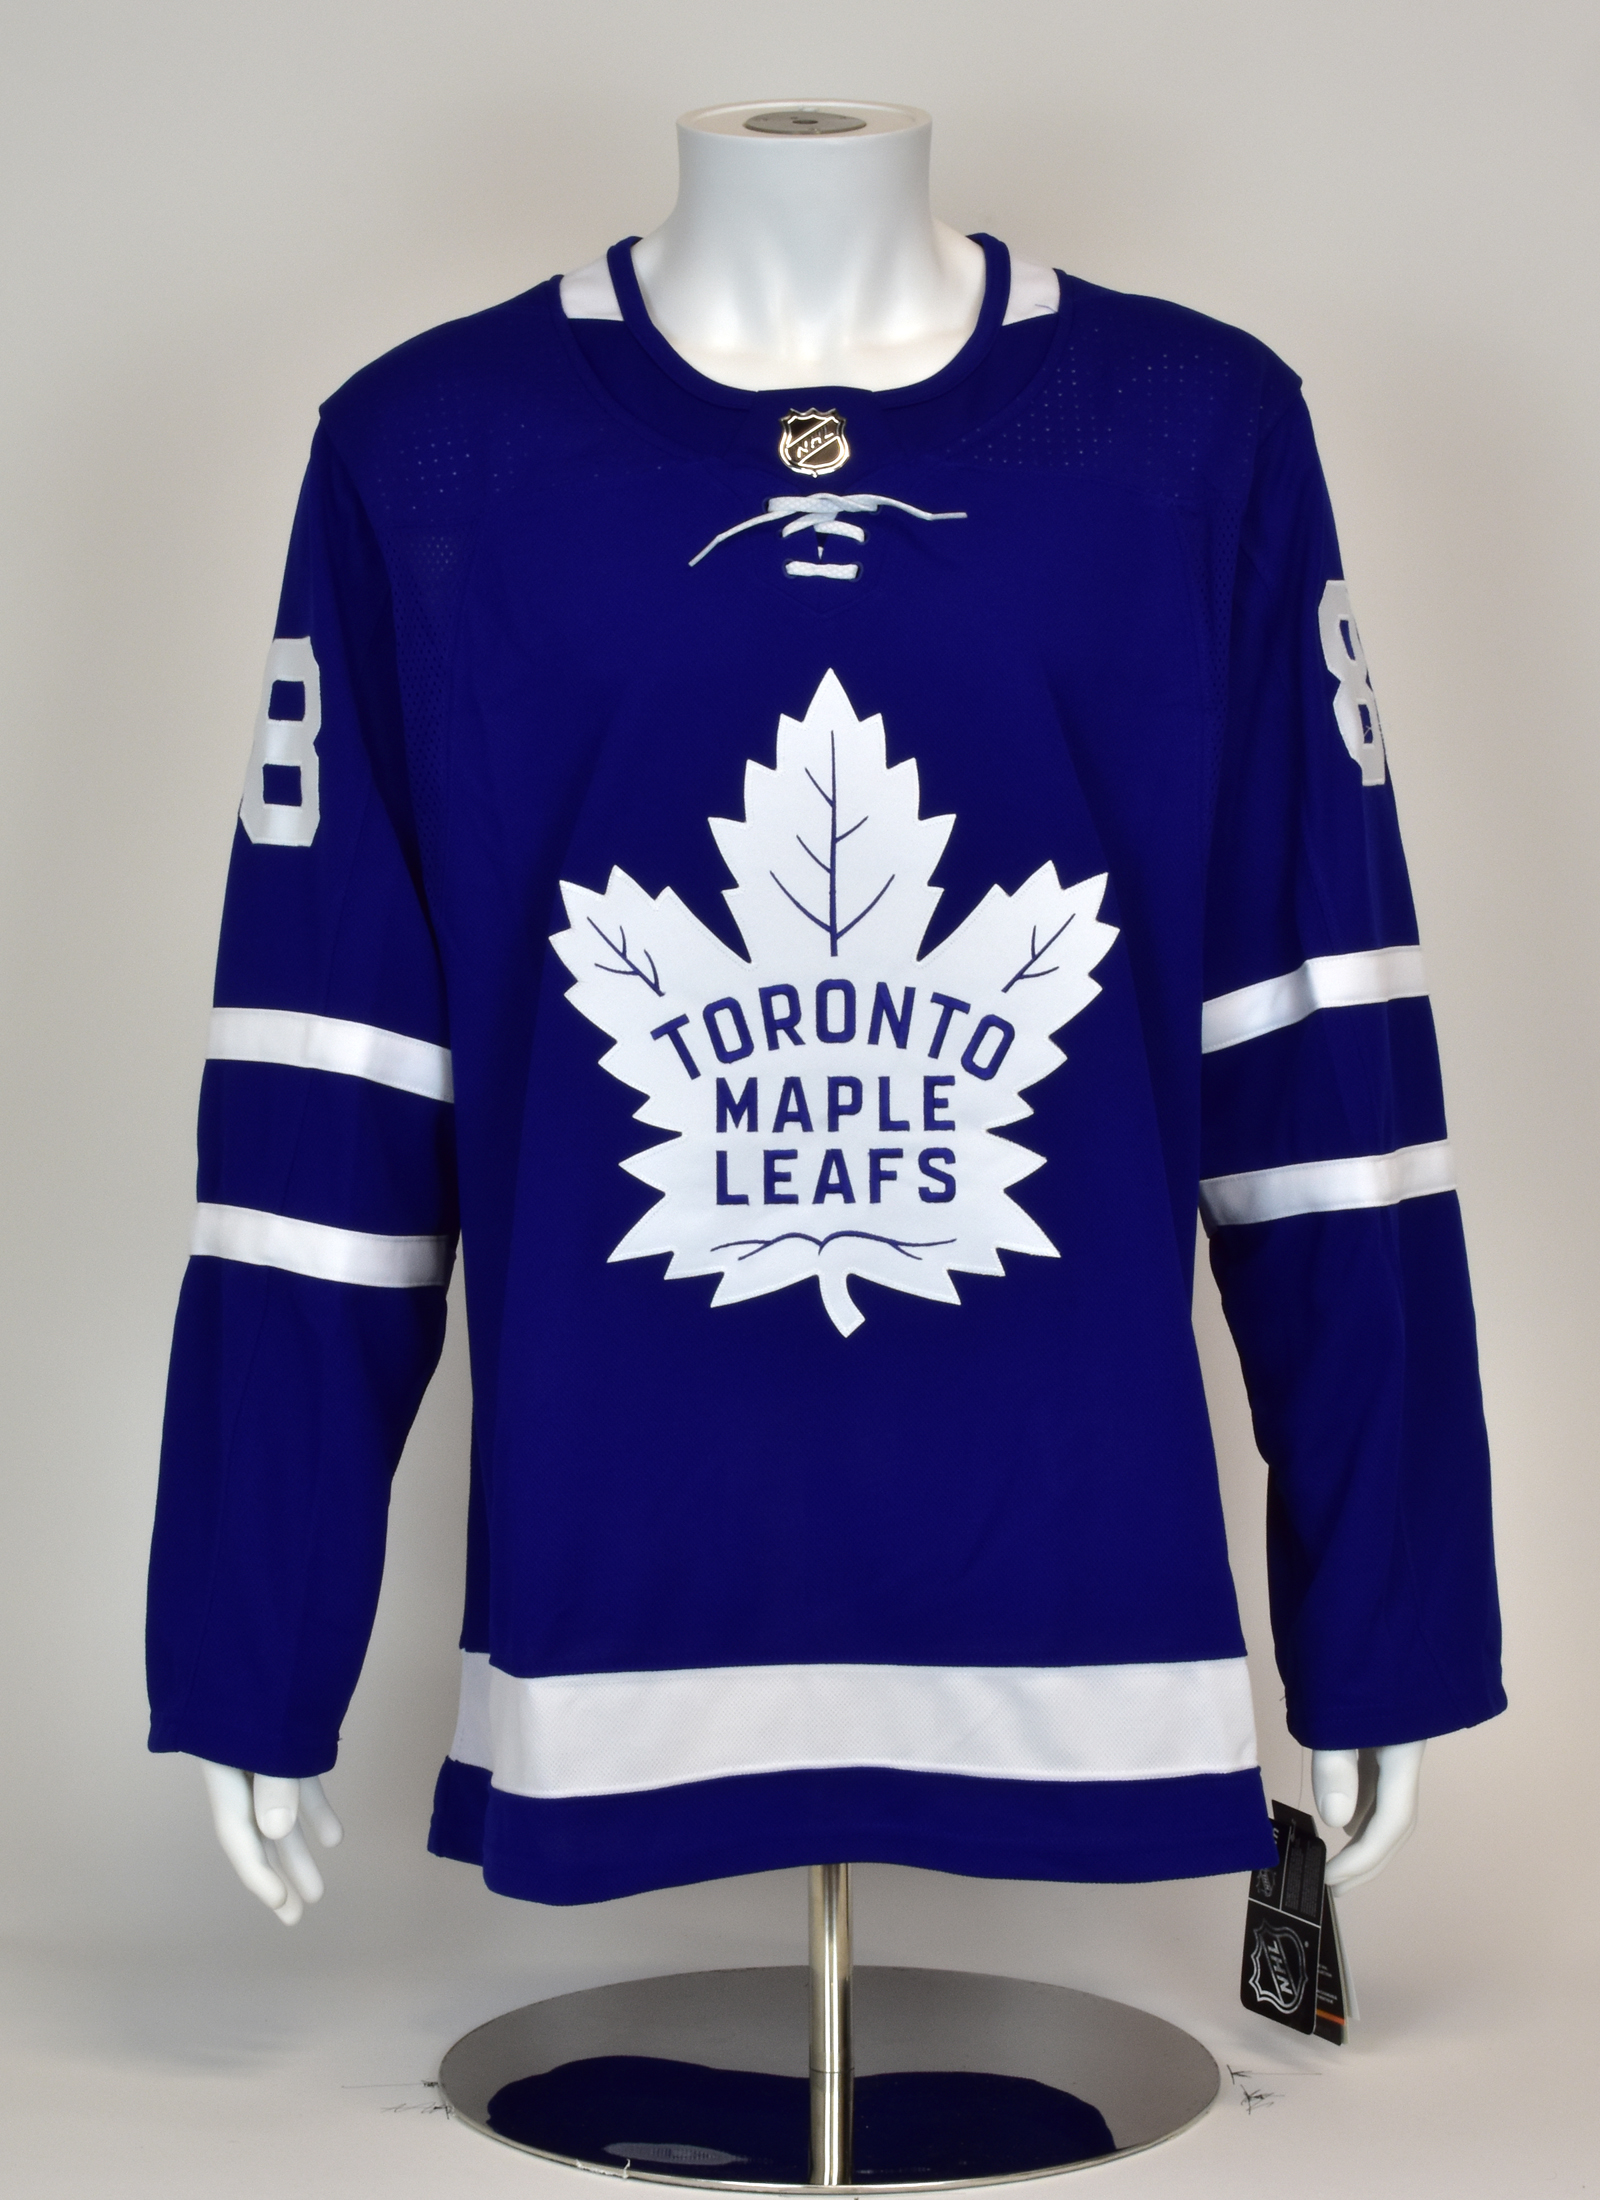 William Nylander Toronto Maple Leafs Autographed Adidas Jersey